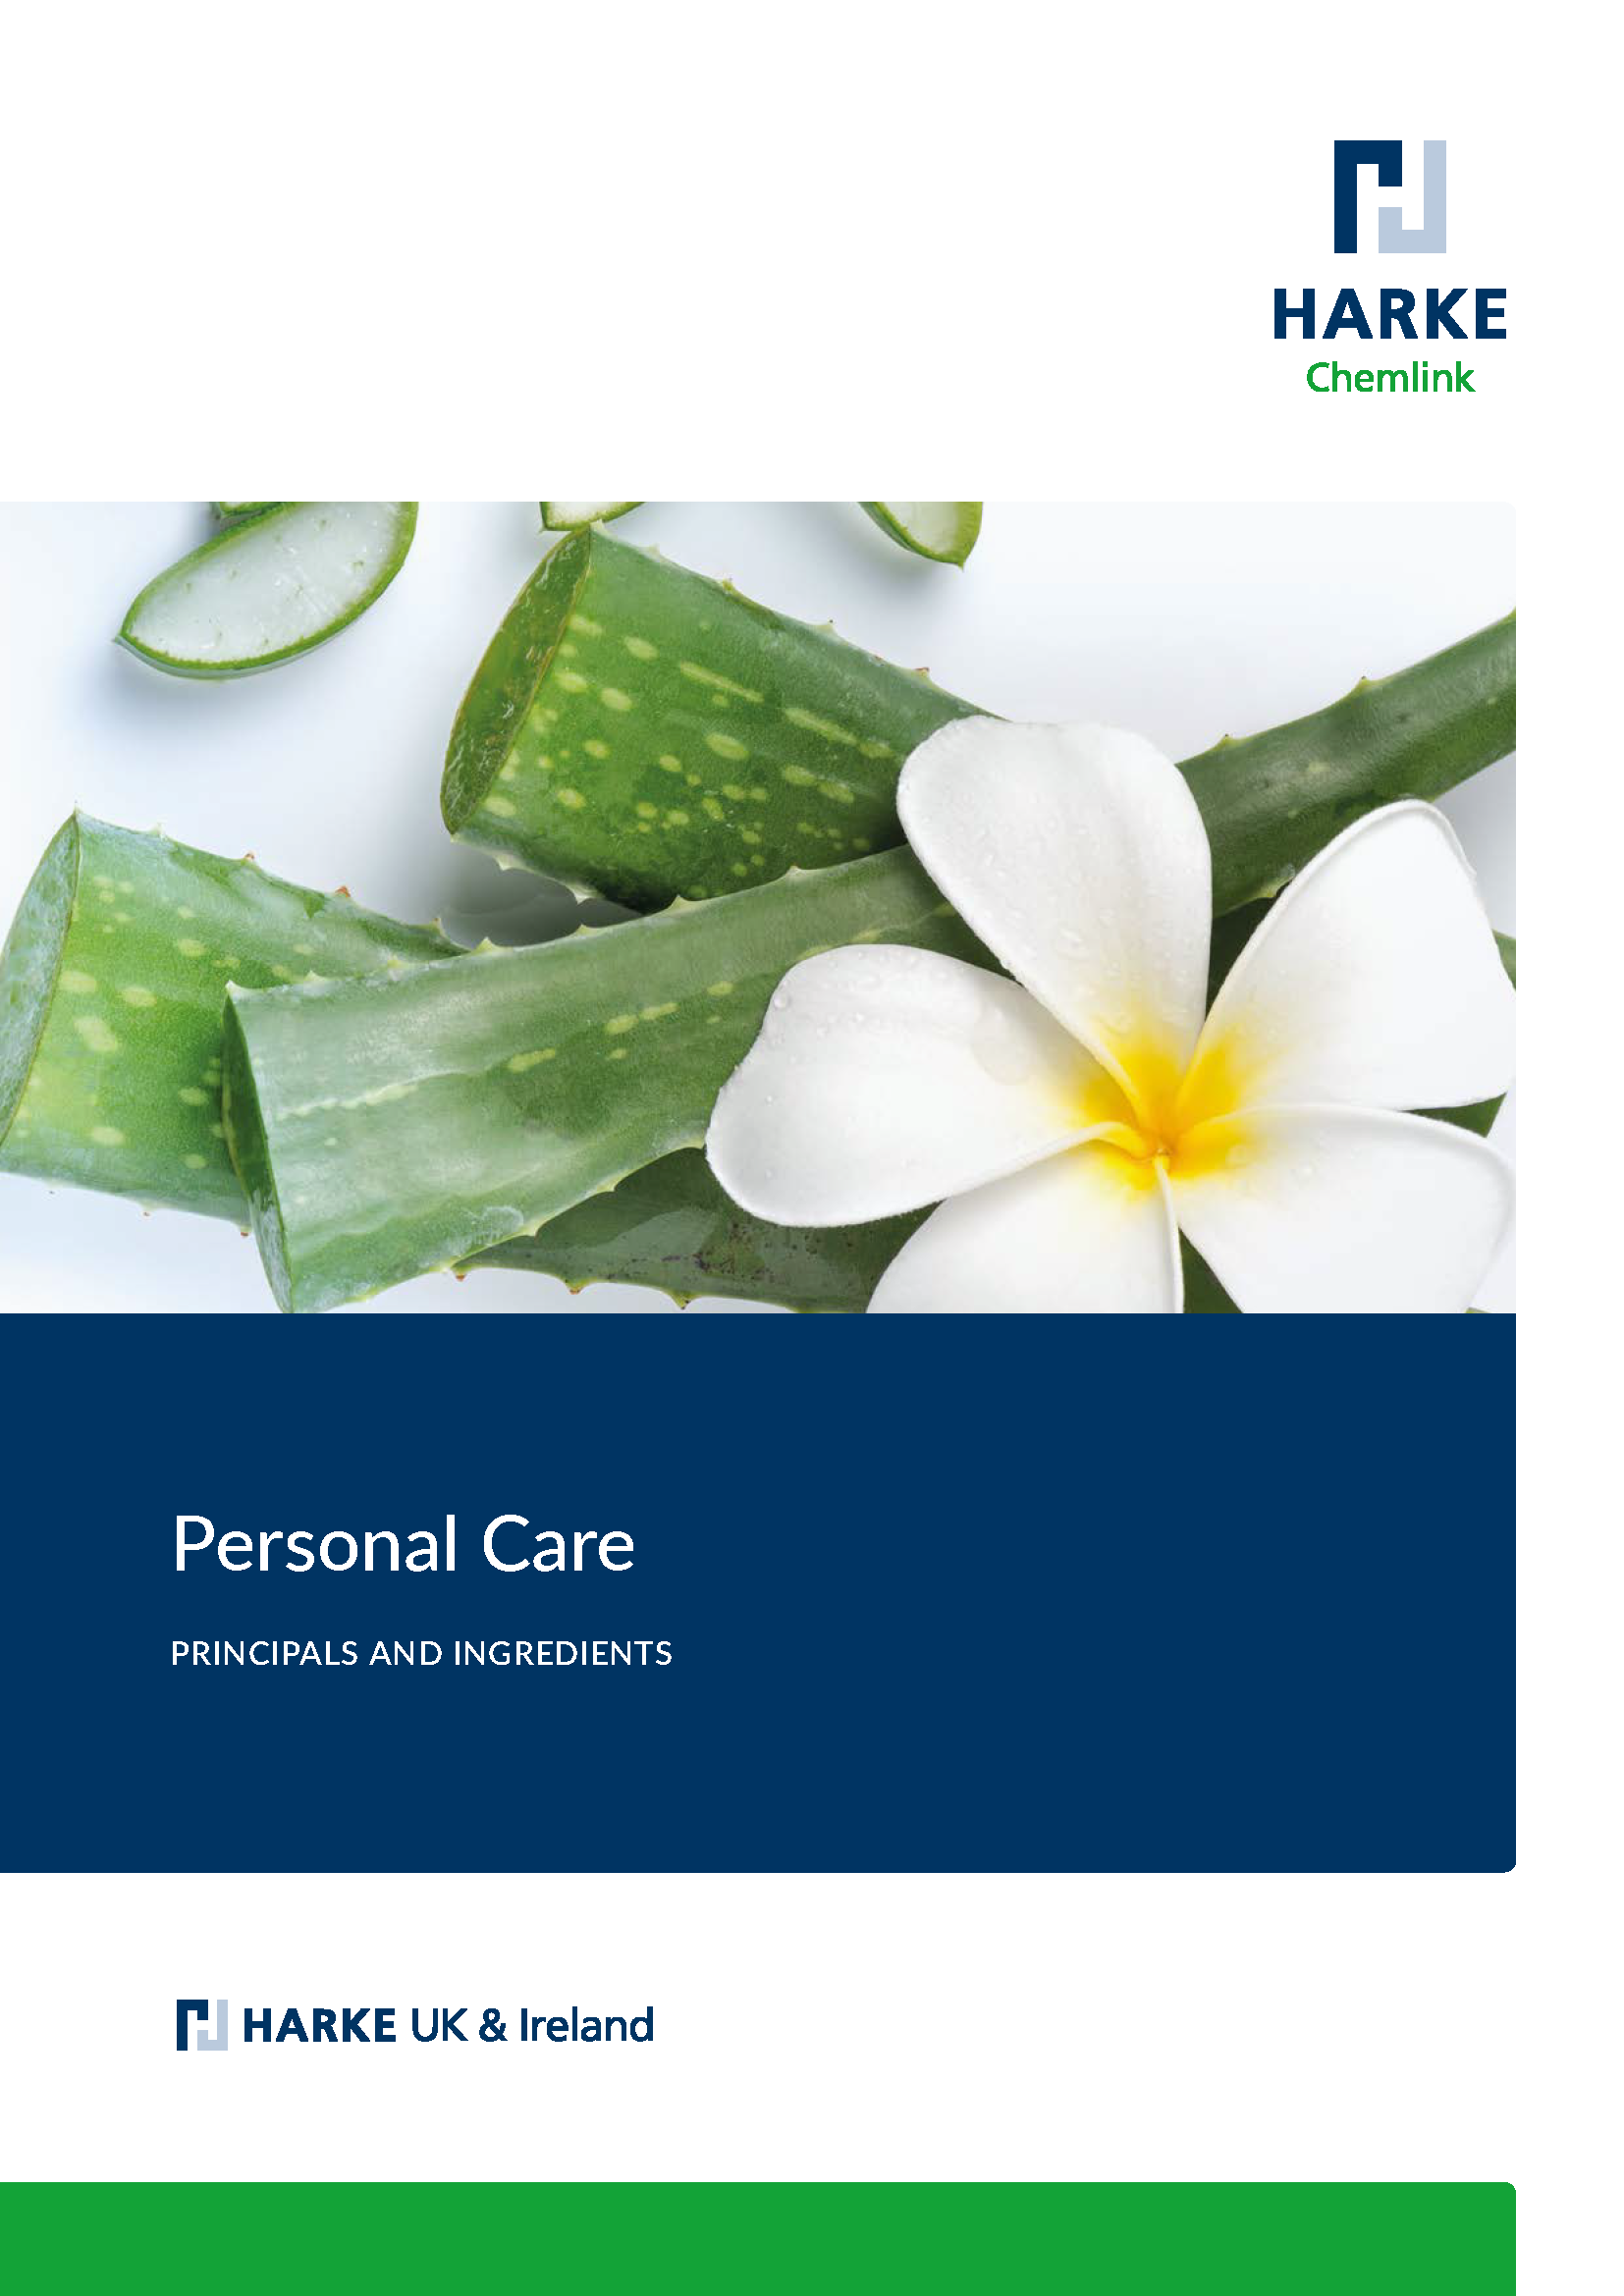 Personal Care brochure